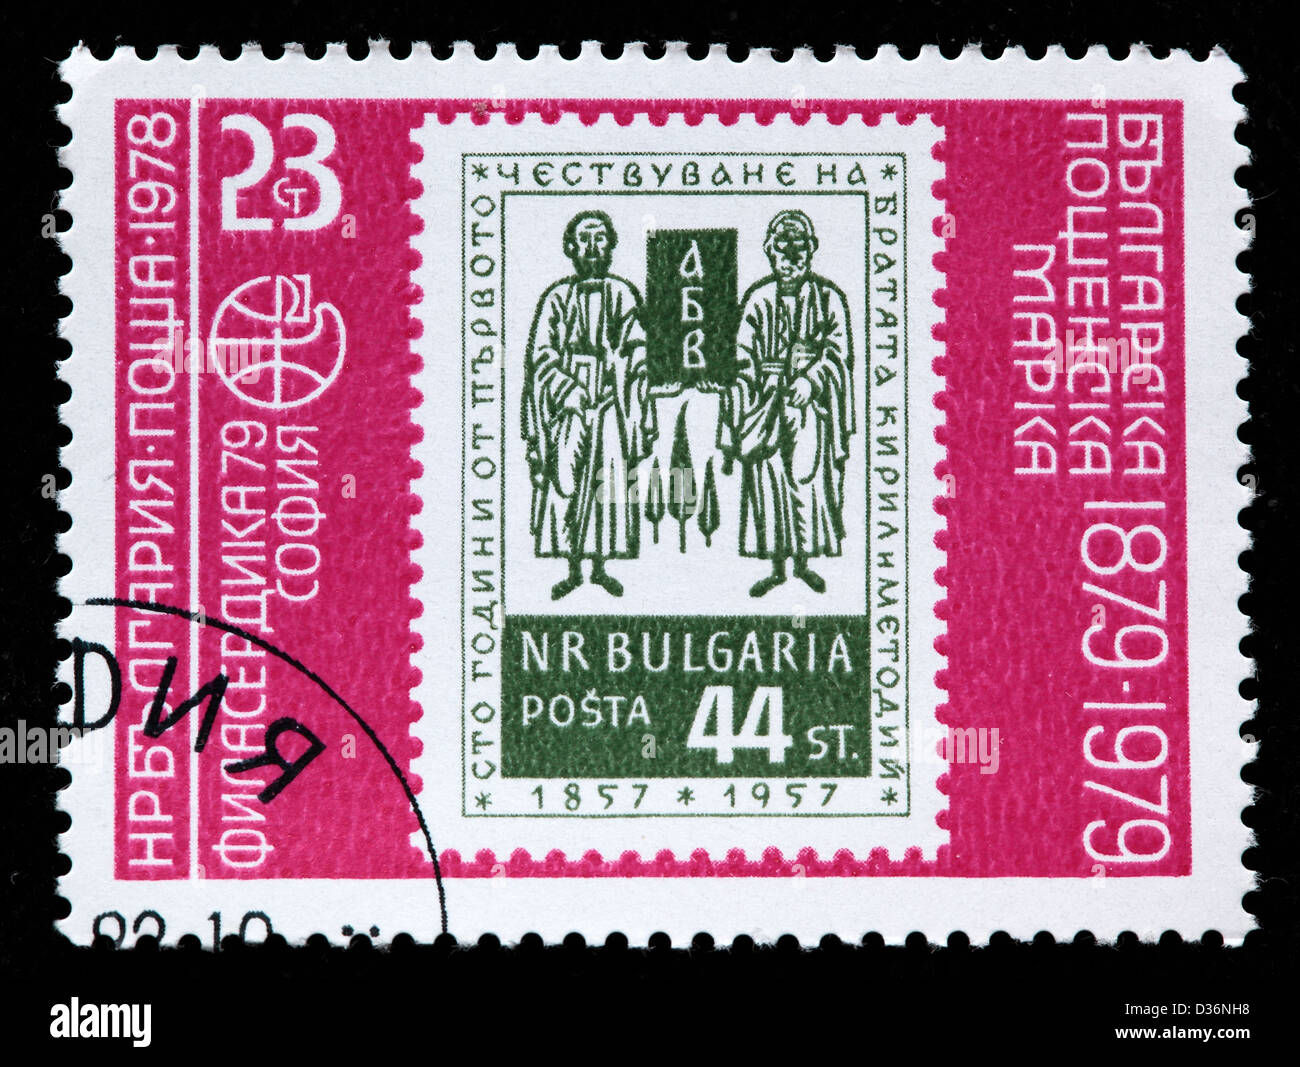 Sello de Bulgaria, Bulgaria, 1979 Foto de stock